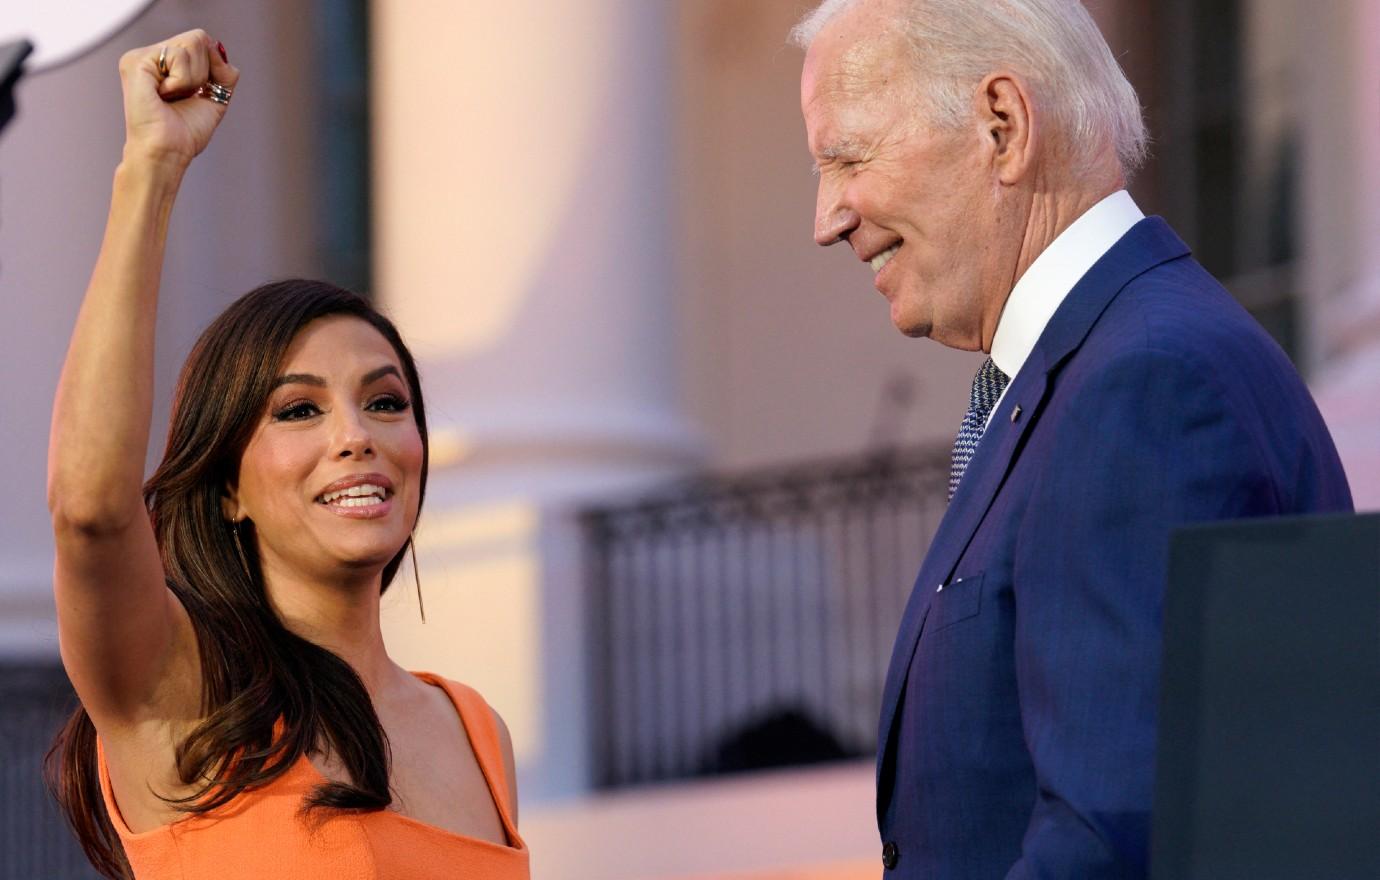 President Joe Biden Accused Of Trying To Grope Eva Longoria